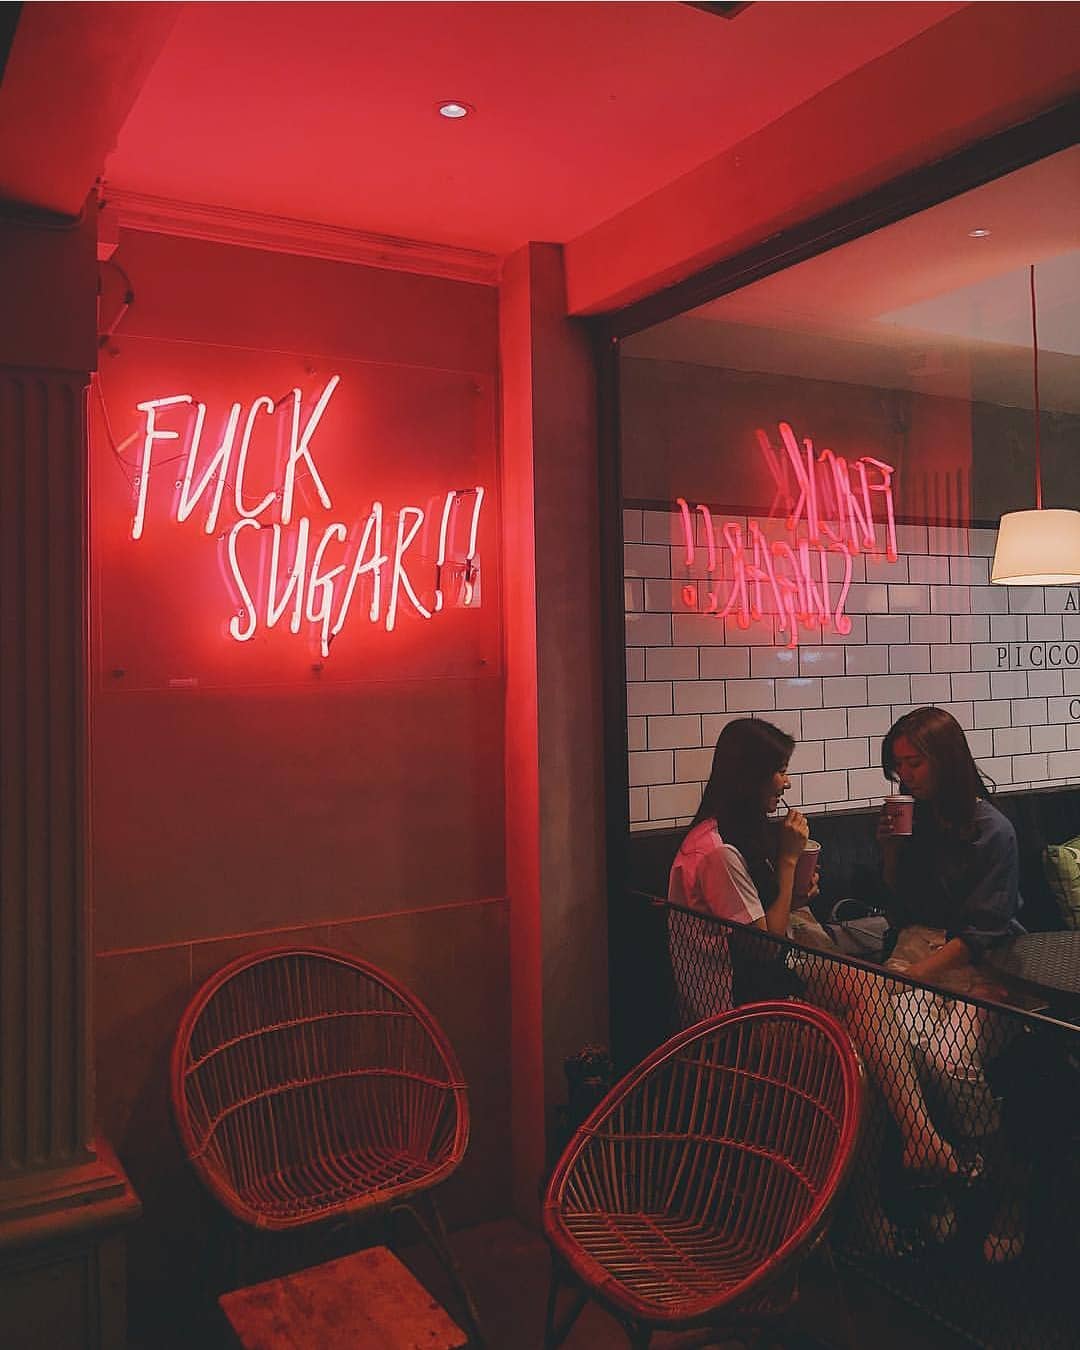 Bukan sekedar hiasan, neon lights ini punya filosofi yang unik - via instagram/@siavania